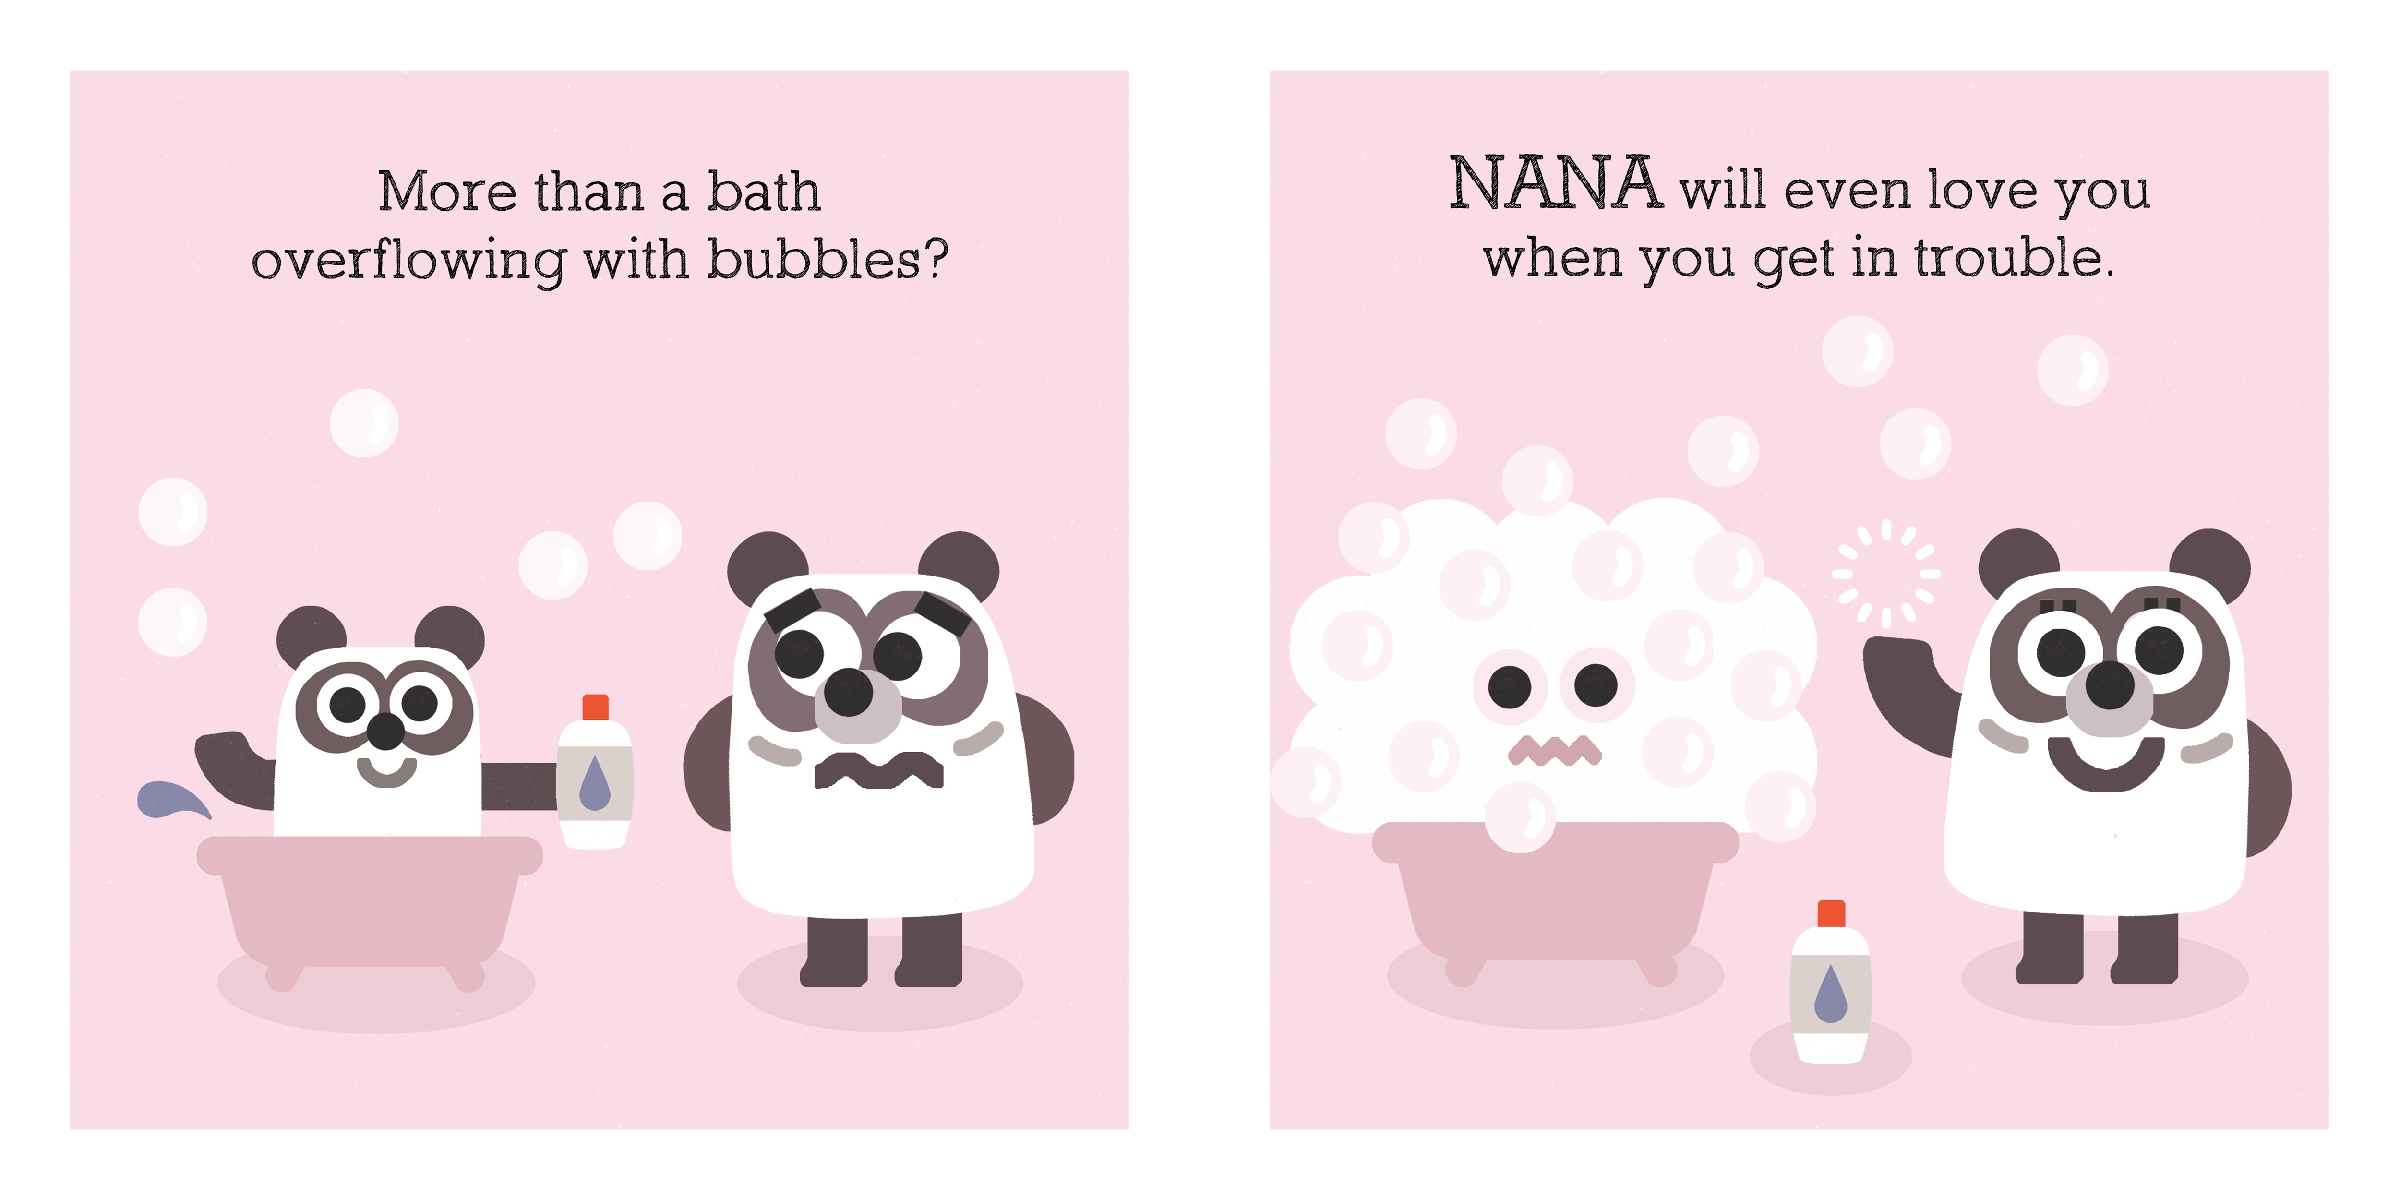 Nana Loves You More